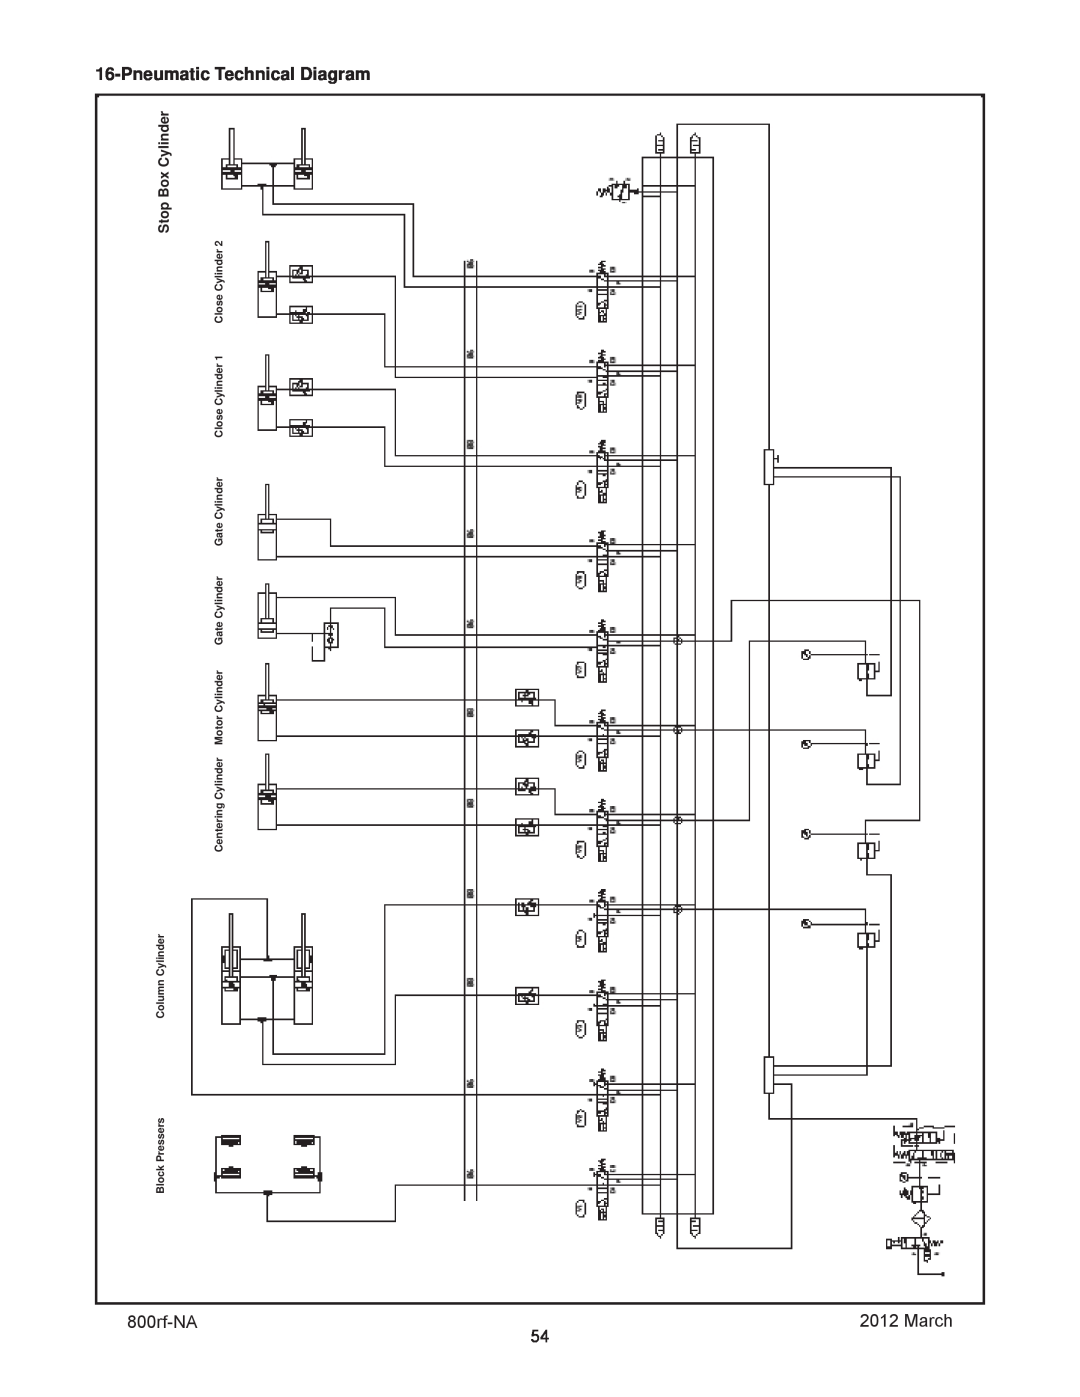 3M 40800, 800rf manual Pneumatic Technical Diagram, Stop Box Cylinder, Column Cylinder Block Pressers 